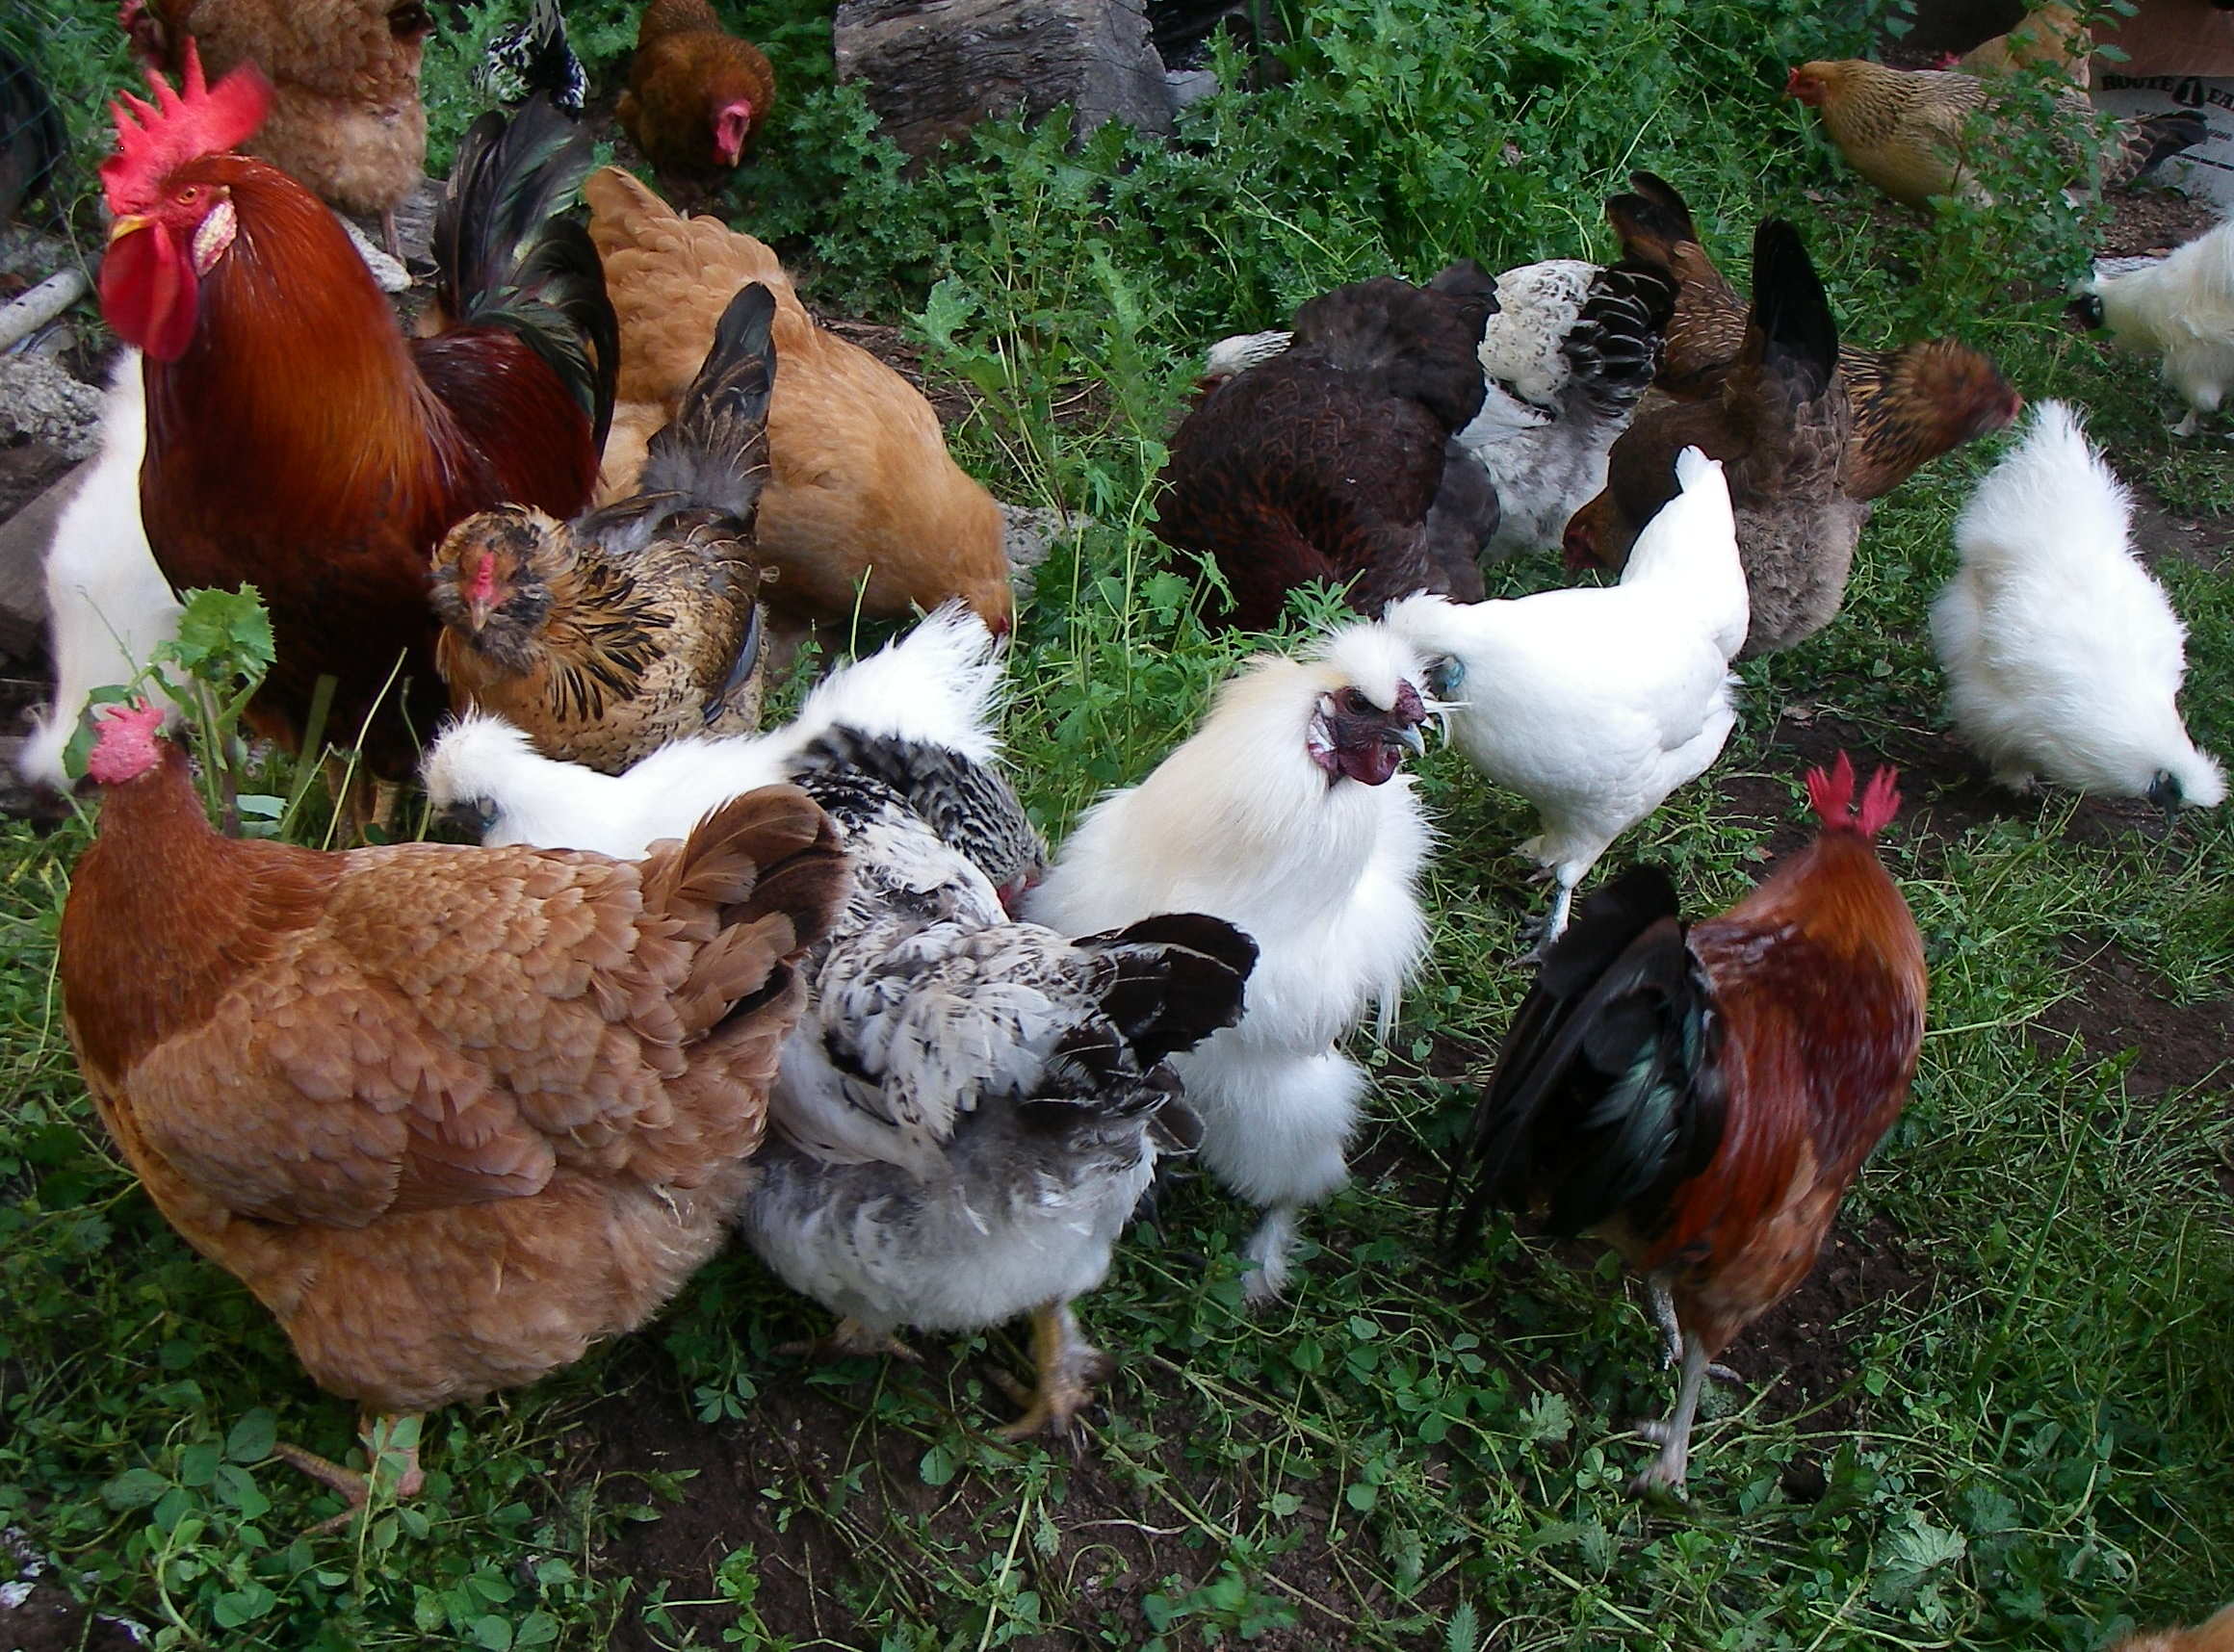 Black Hen Farm - Providing Humanely Produced Eggs